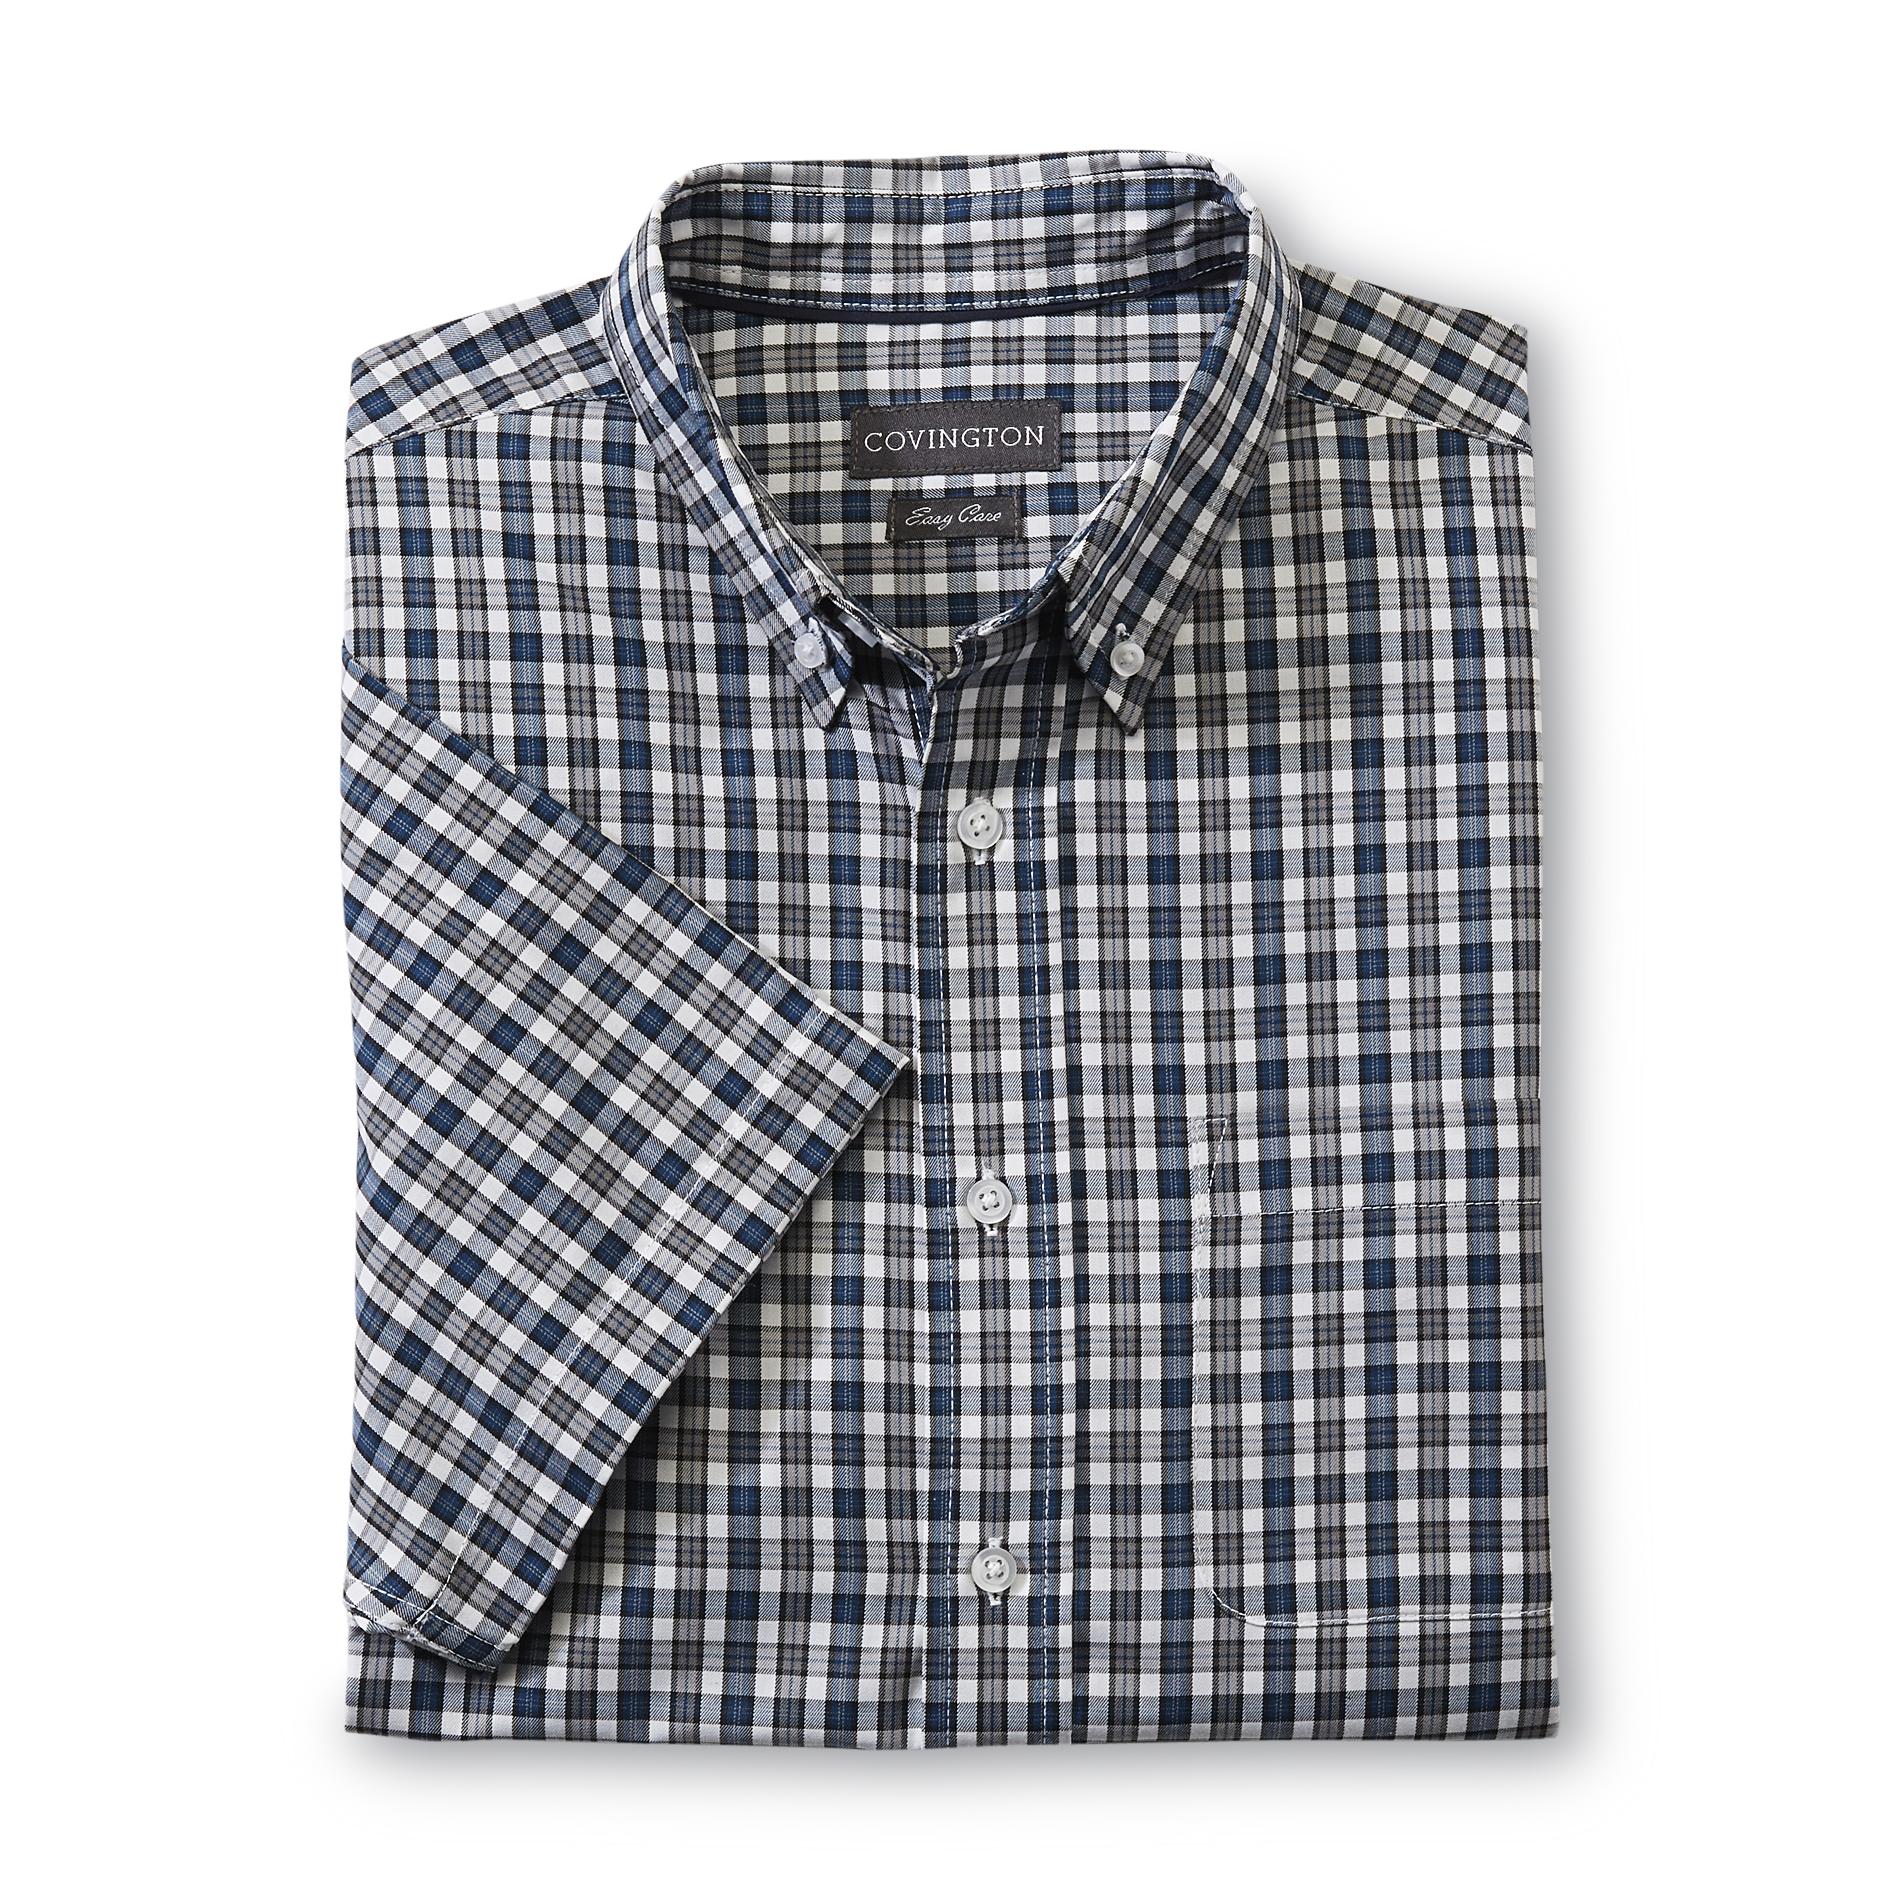 Covington Men's Easy Care Short-Sleeve Shirt - Checkered